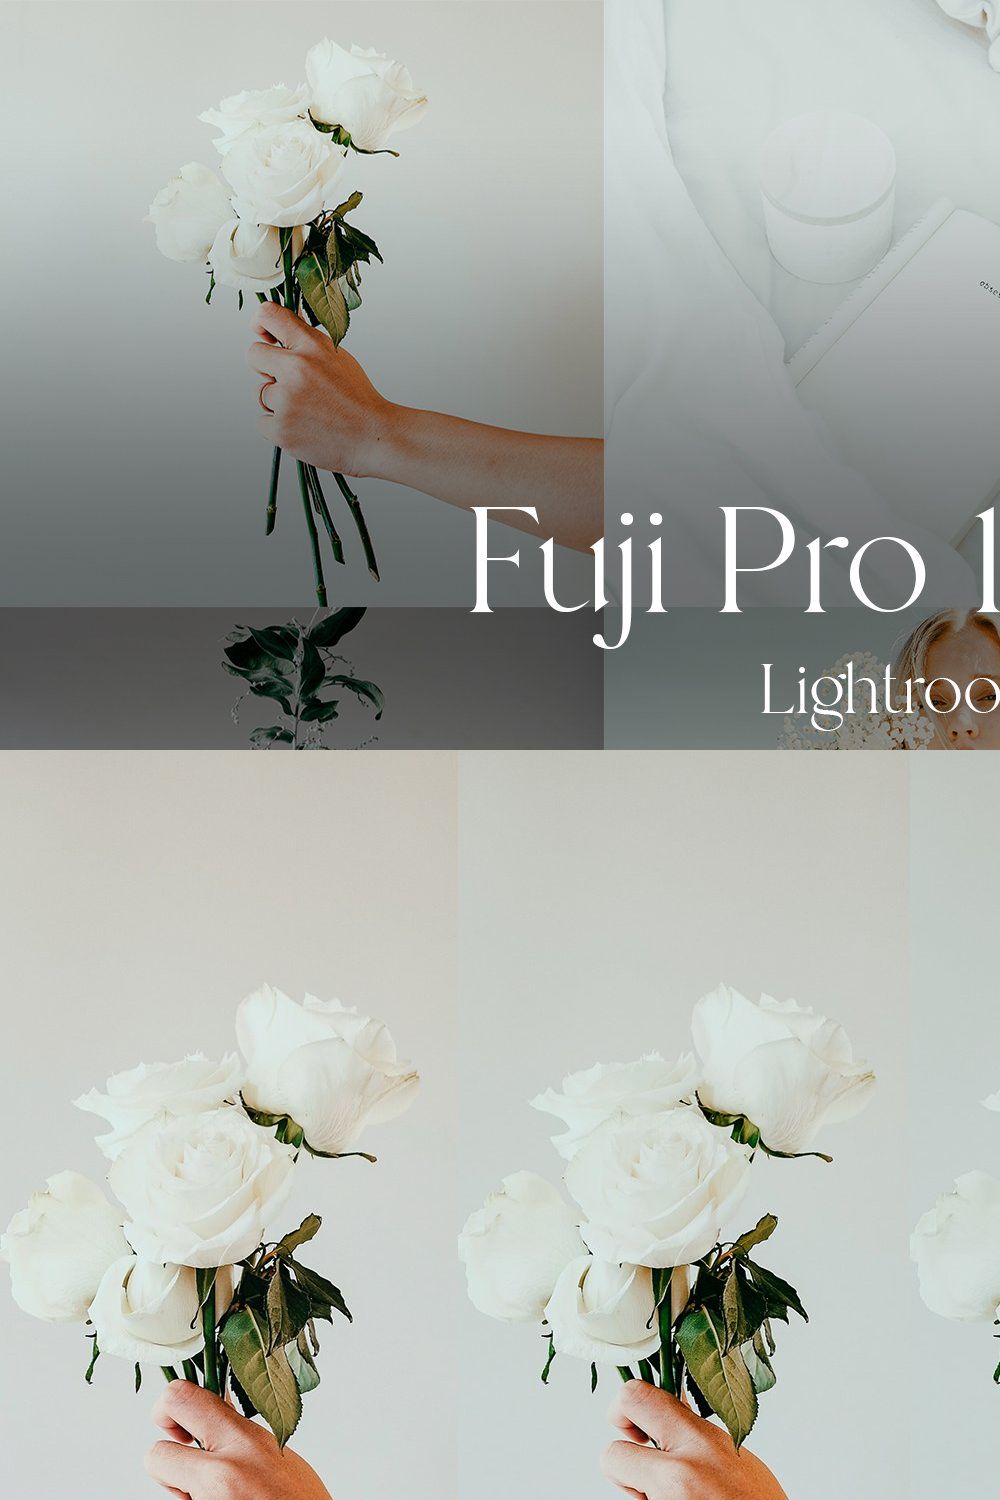 Fuji Pro 160NS — Lightroom pinterest preview image.